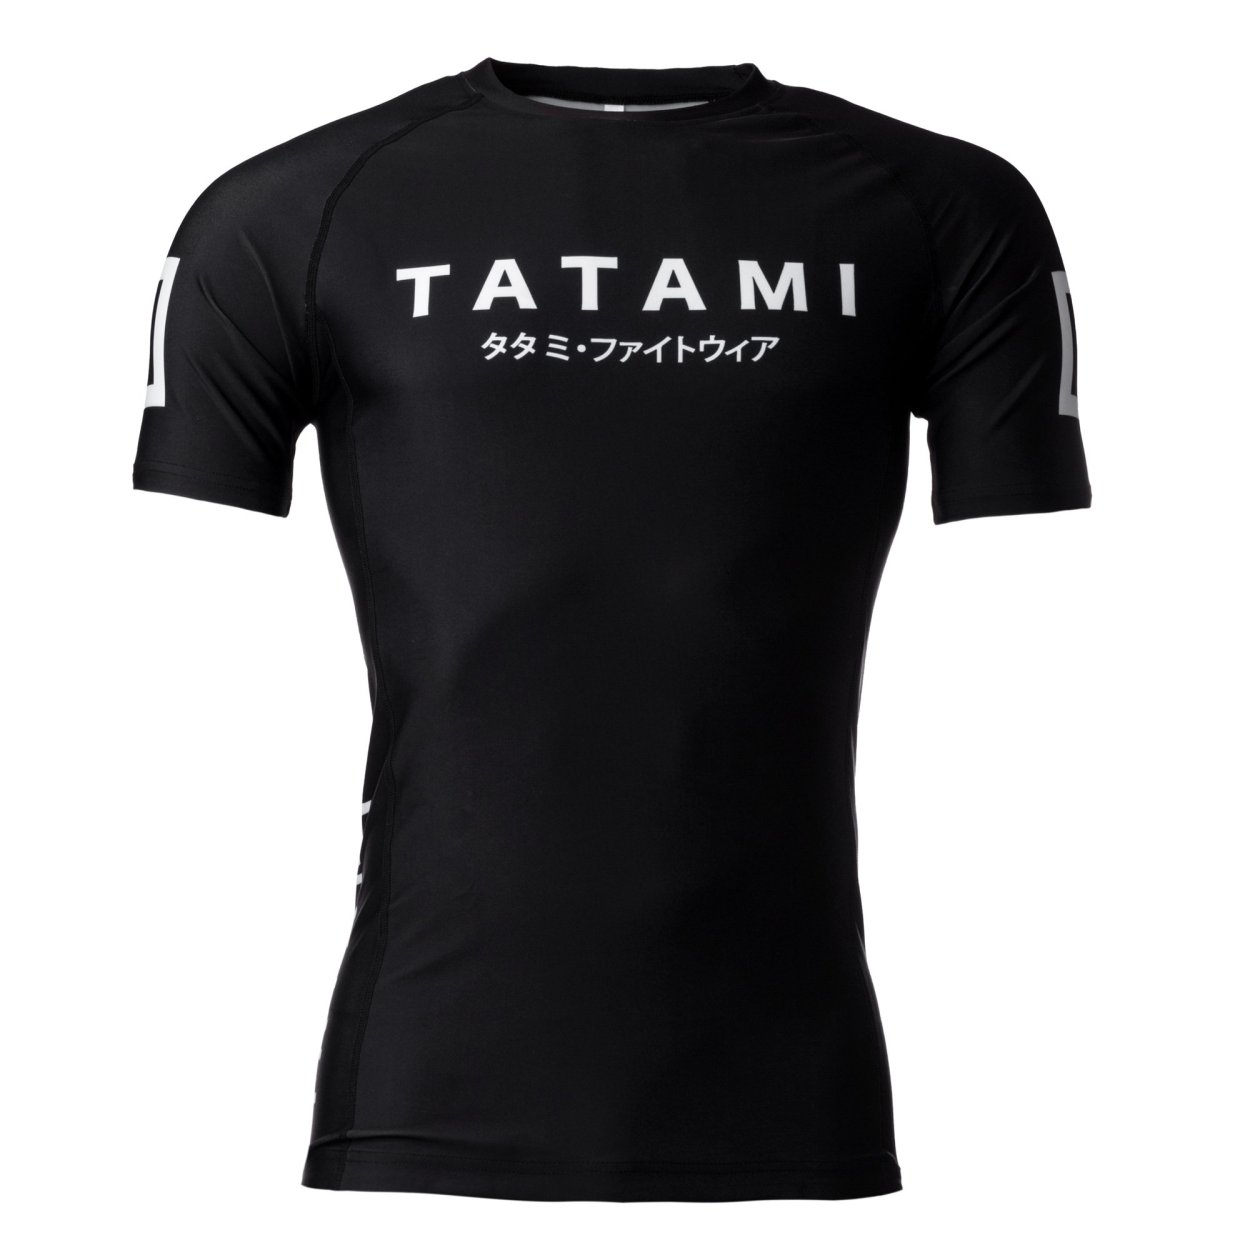 Tatami Adults Katakana Short Sleeve Rash Guard - Black - Click Image to Close